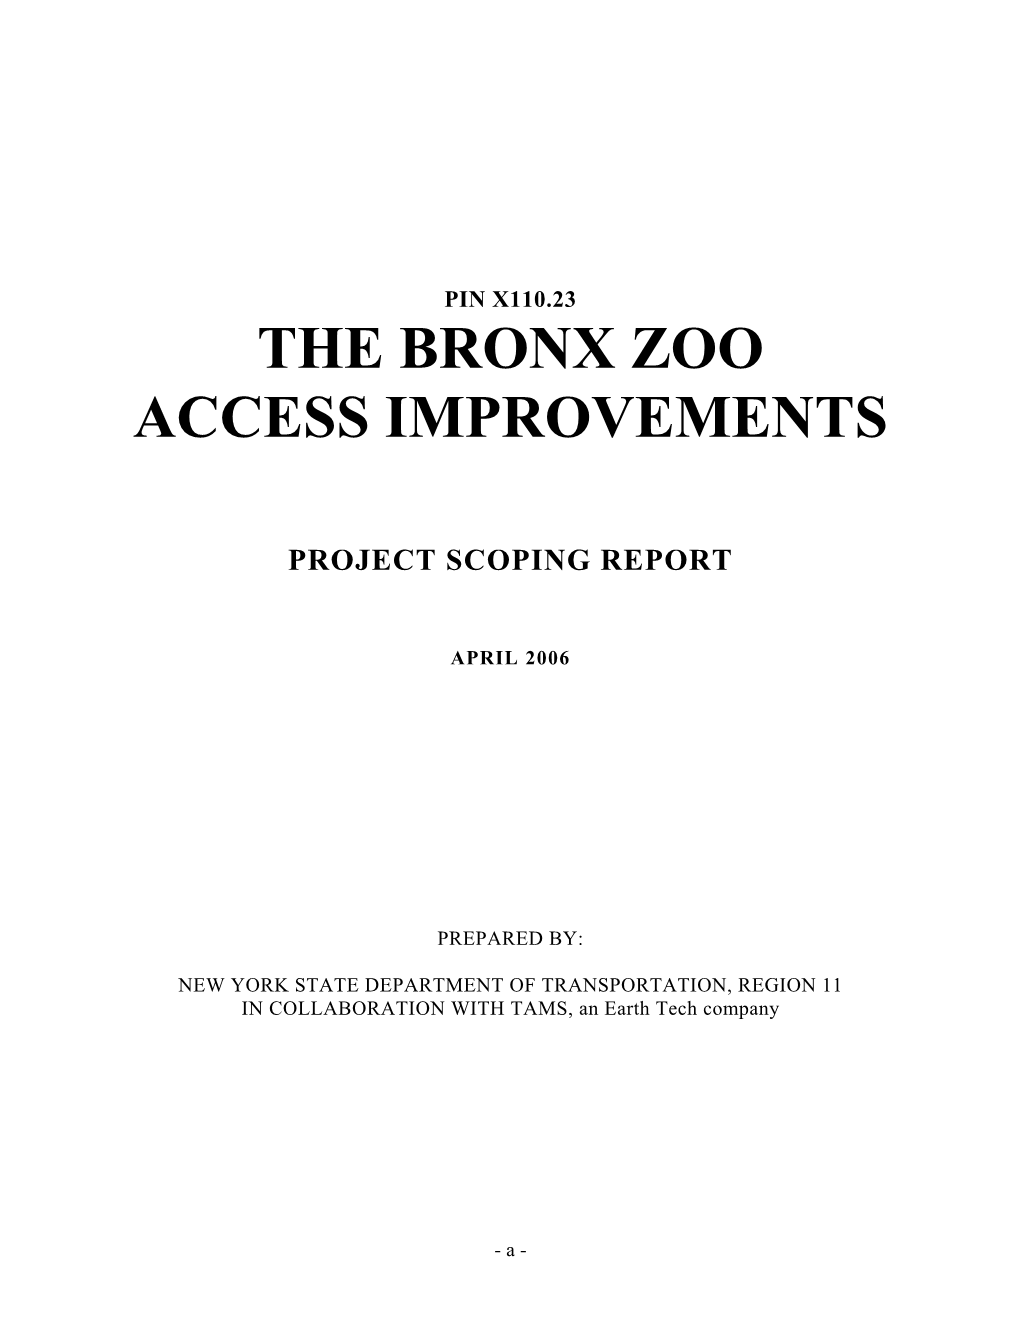 The Bronx Zoo Access Improvements